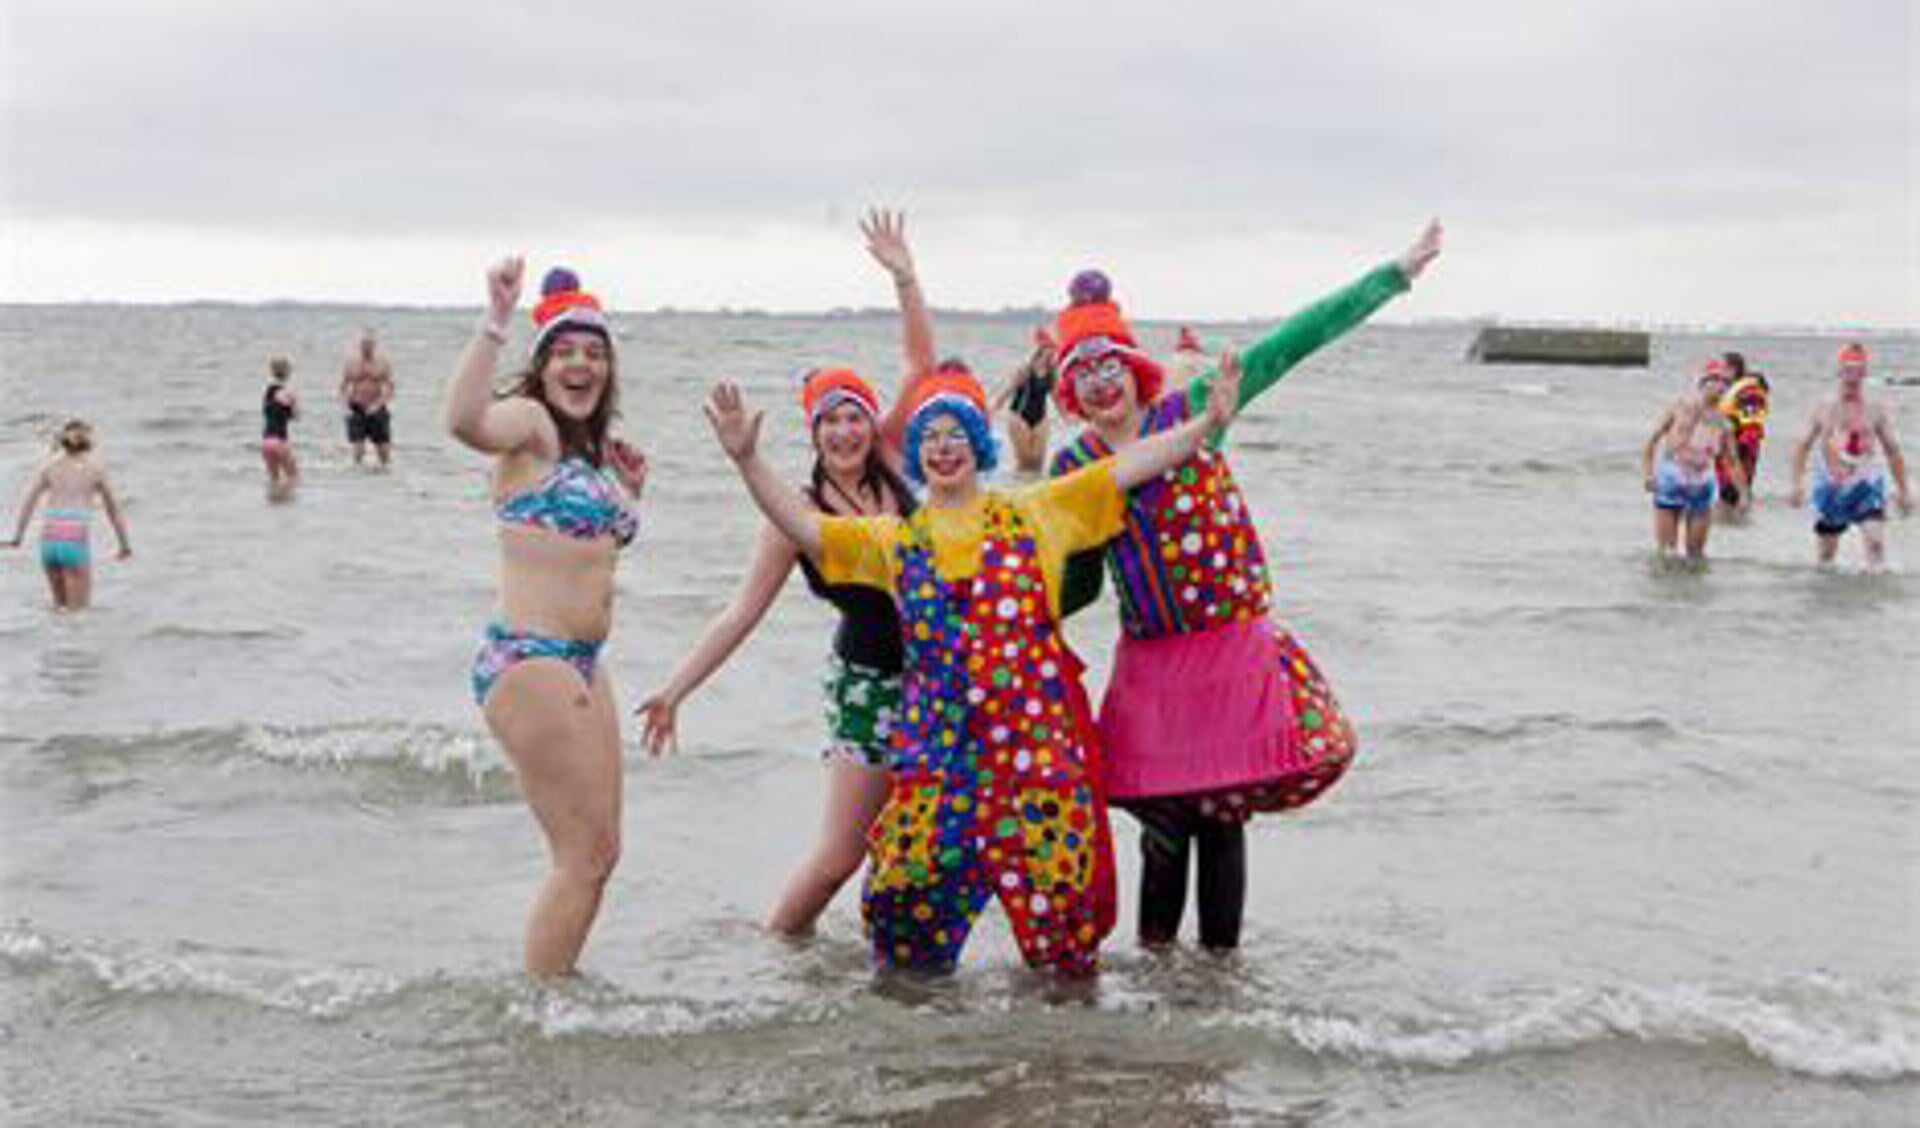 clowns winnen het van bikini's